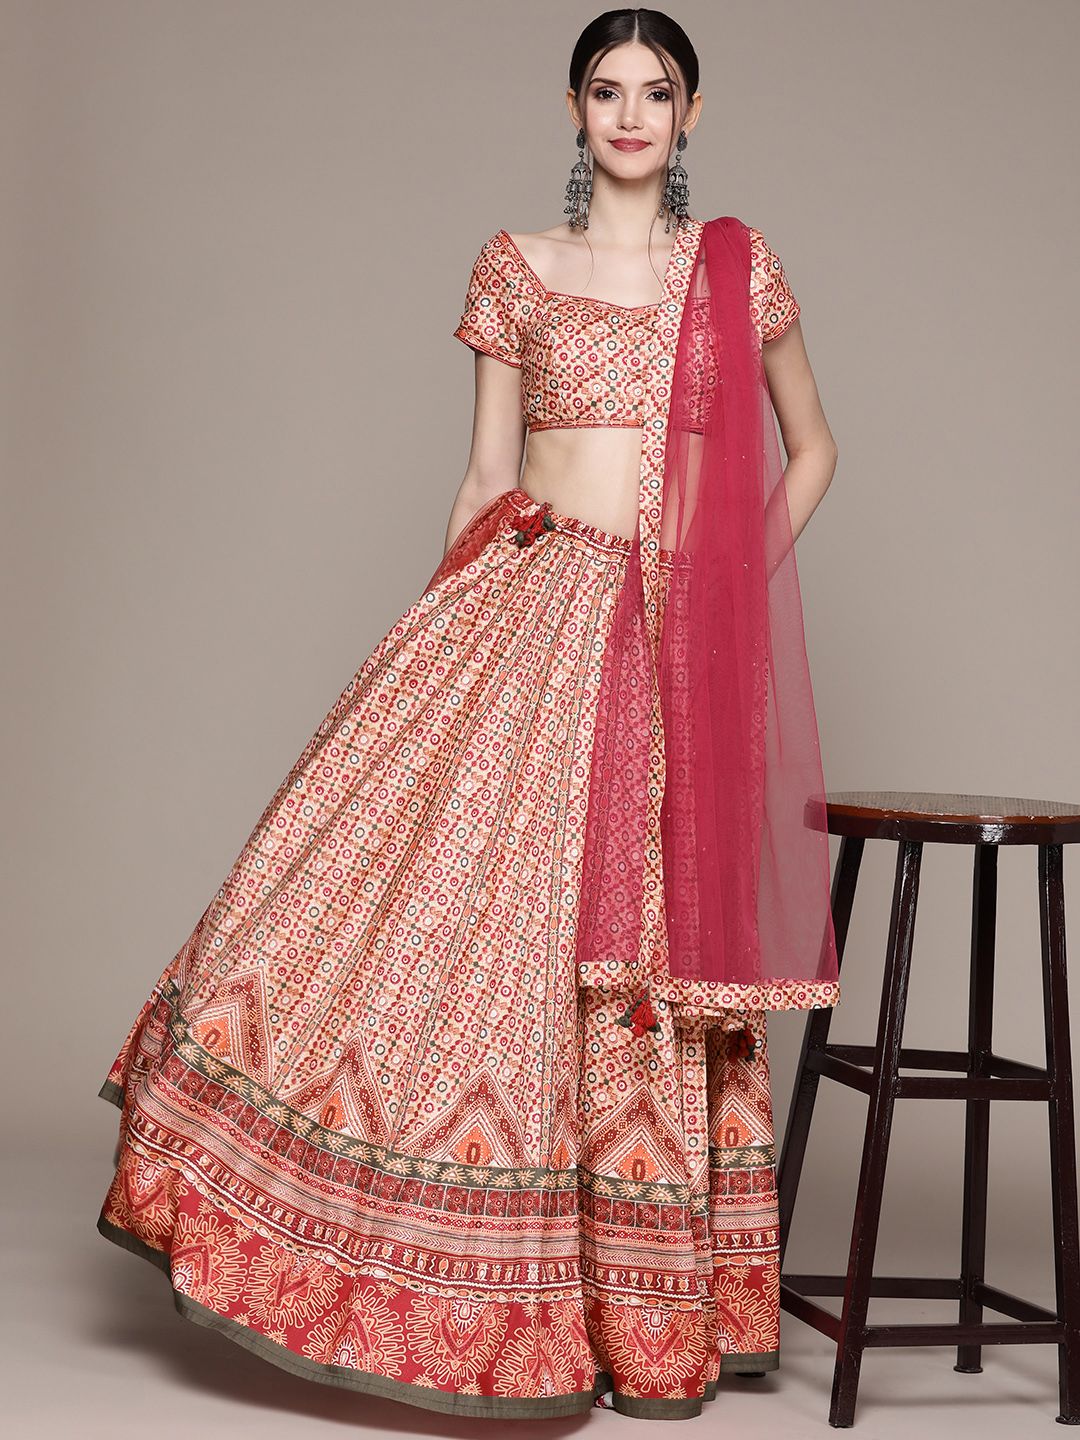 aarke Ritu Kumar Pink & Green Printed Ready to Wear Lehenga with Blouse & Dupatta Price in India